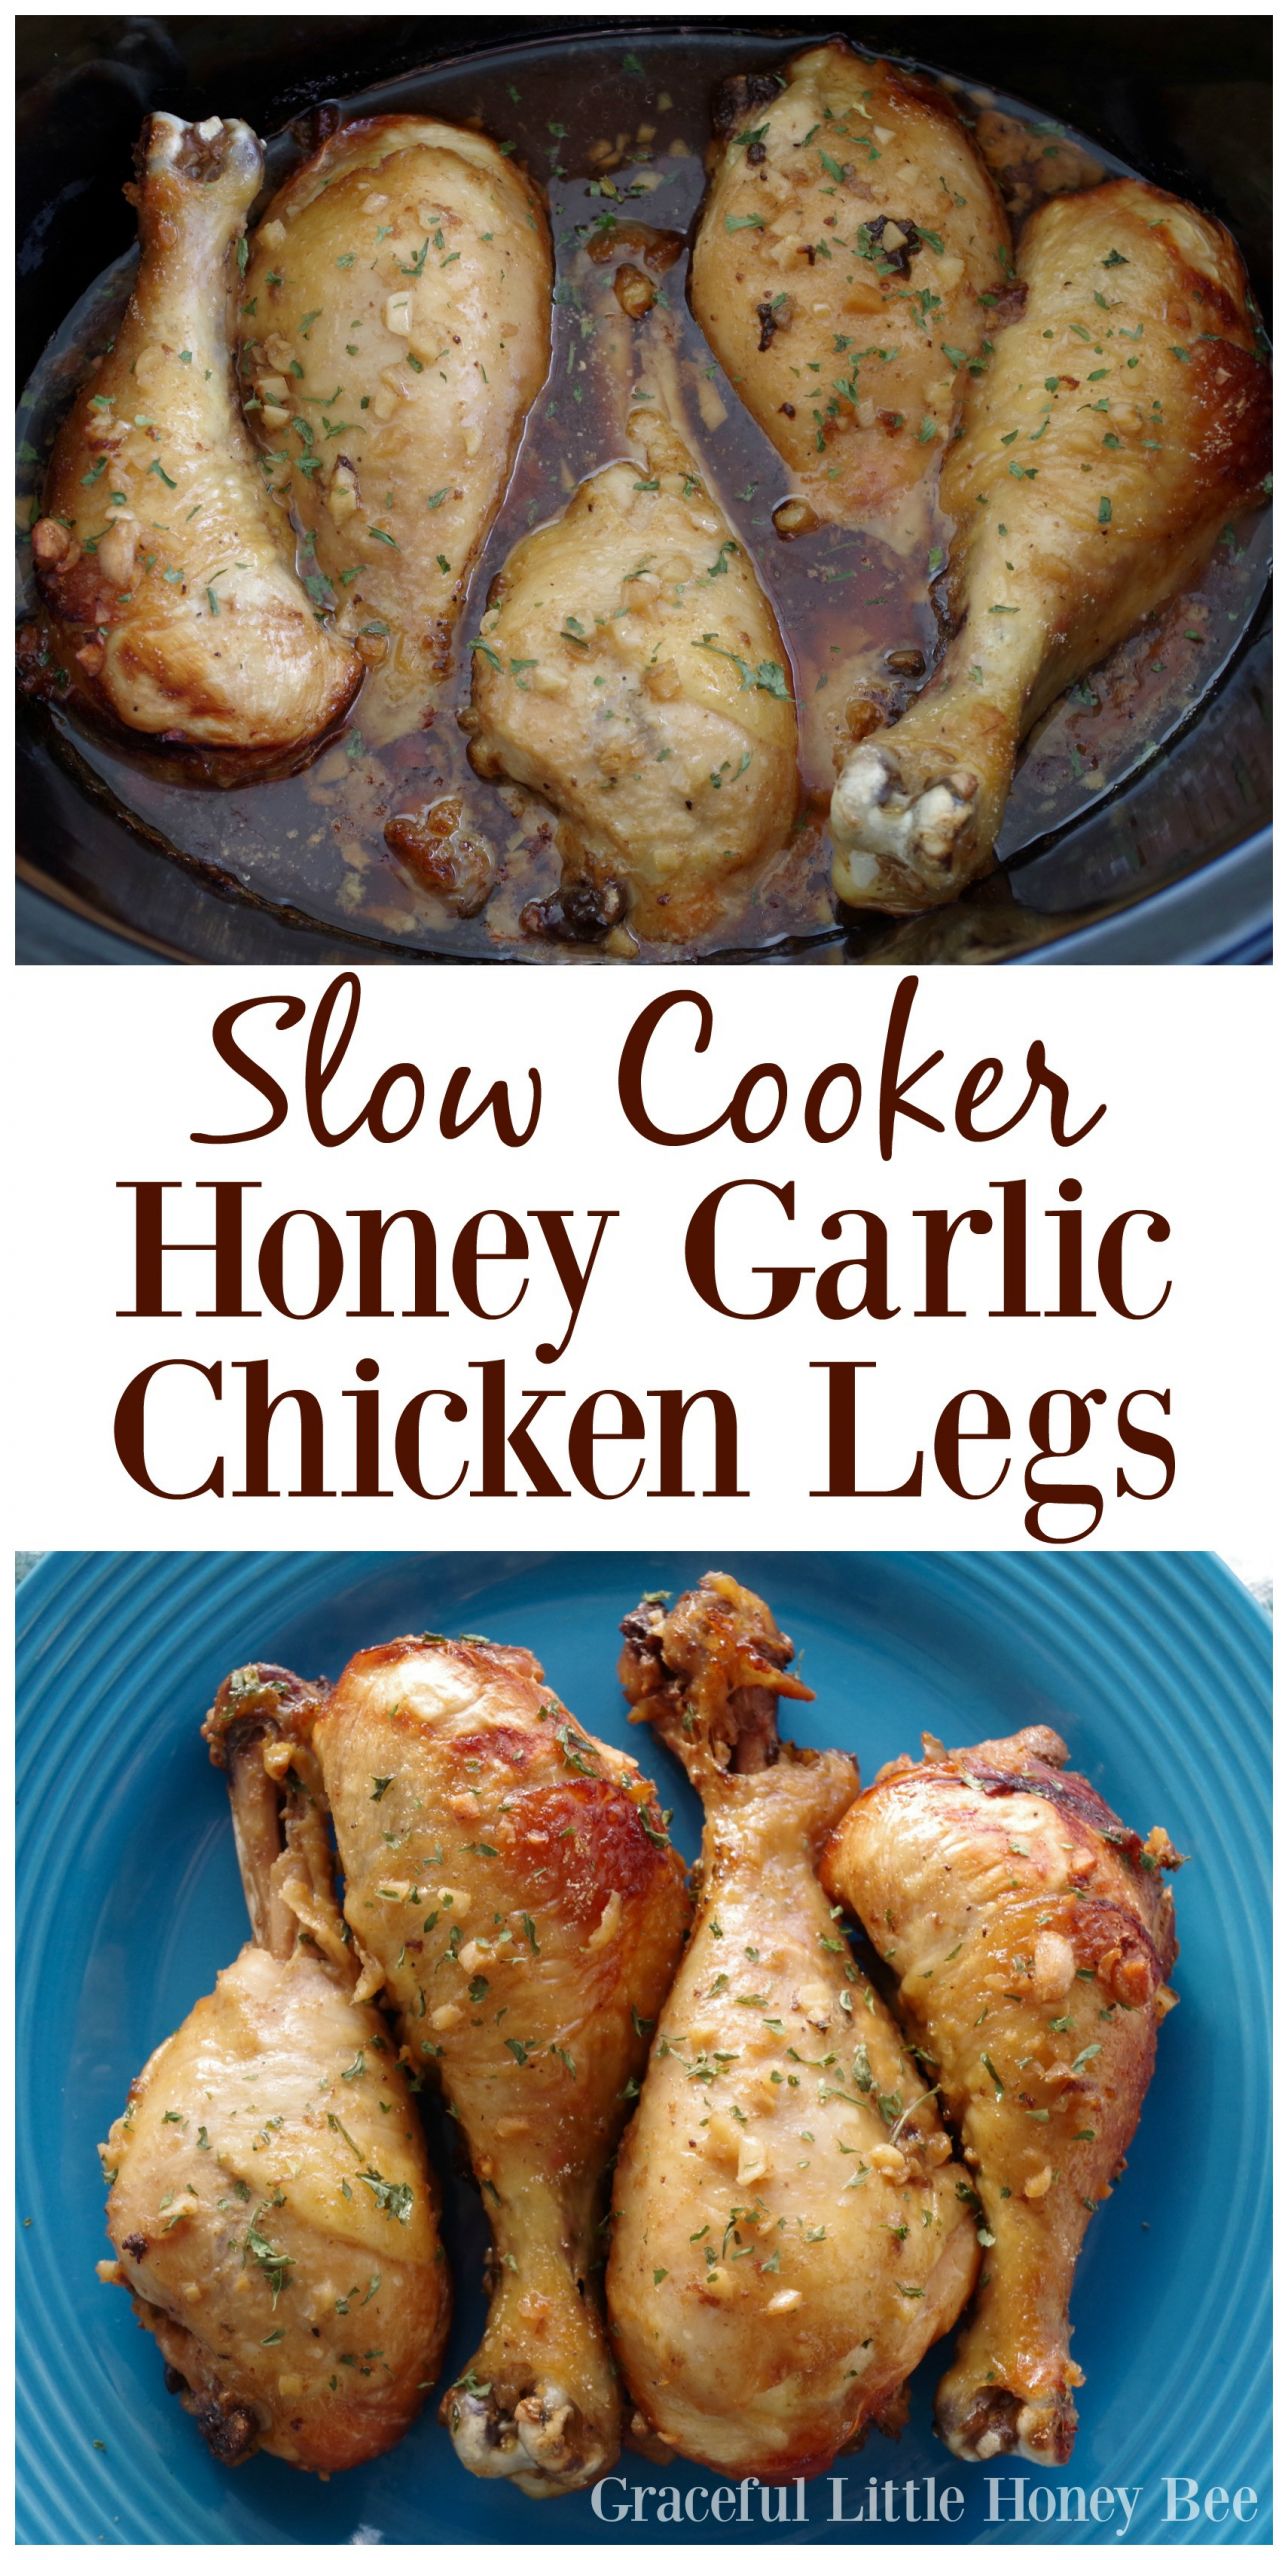 Chicken Legs Slow Cooker
 Slow Cooker Honey Garlic Chicken Legs Graceful Little